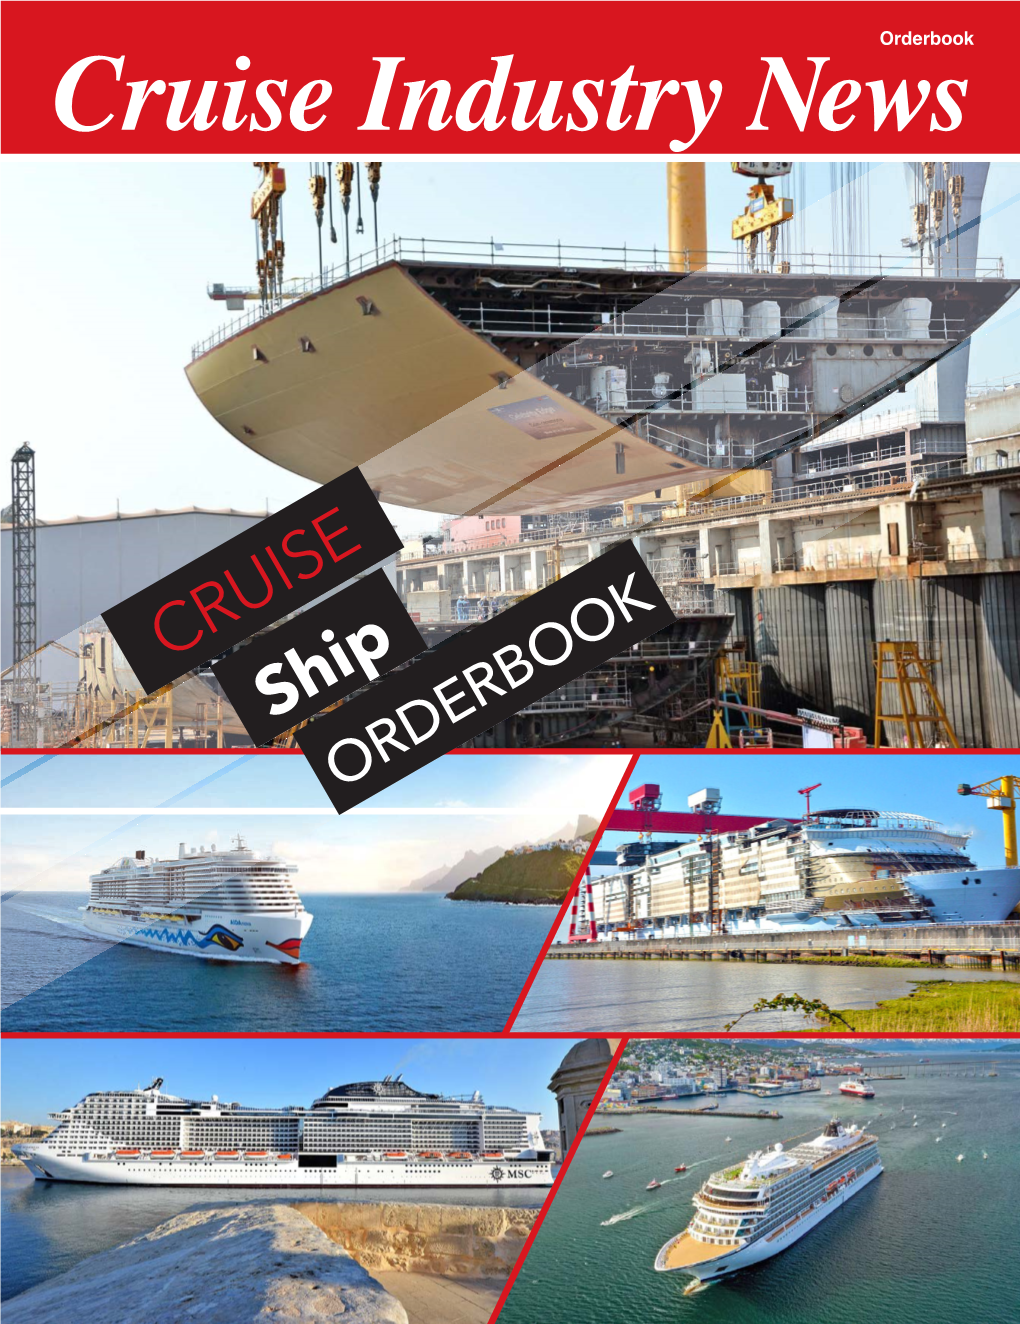 Cruise Ship Orderbook